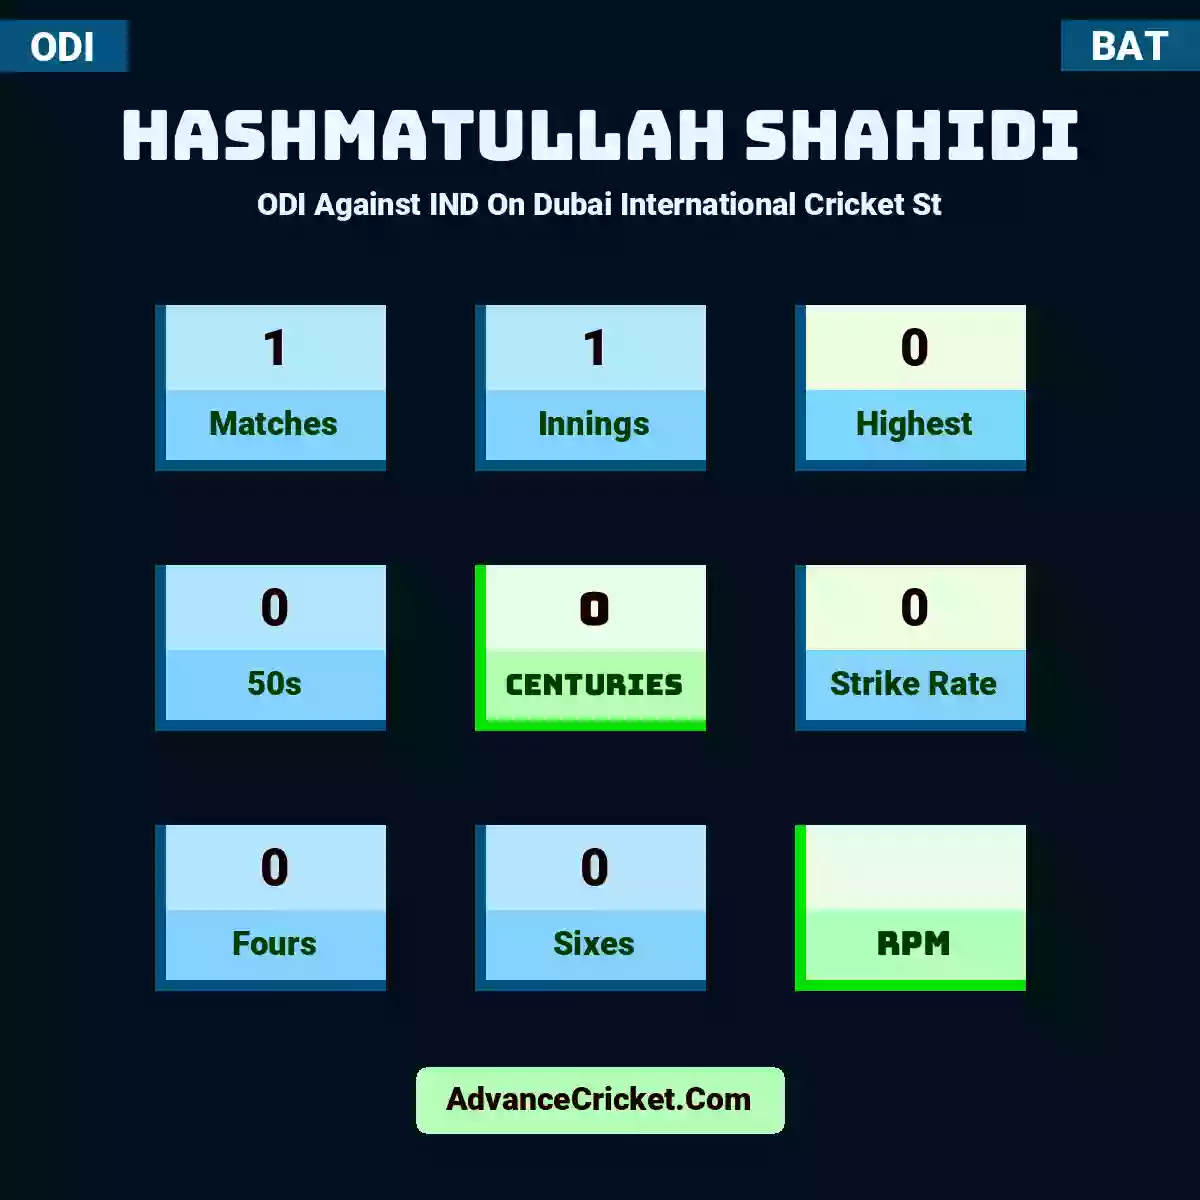 Hashmatullah Shahidi ODI  Against IND On Dubai International Cricket St, Hashmatullah Shahidi played 1 matches, scored 0 runs as highest, 0 half-centuries, and 0 centuries, with a strike rate of 0. H.Shahidi hit 0 fours and 0 sixes.